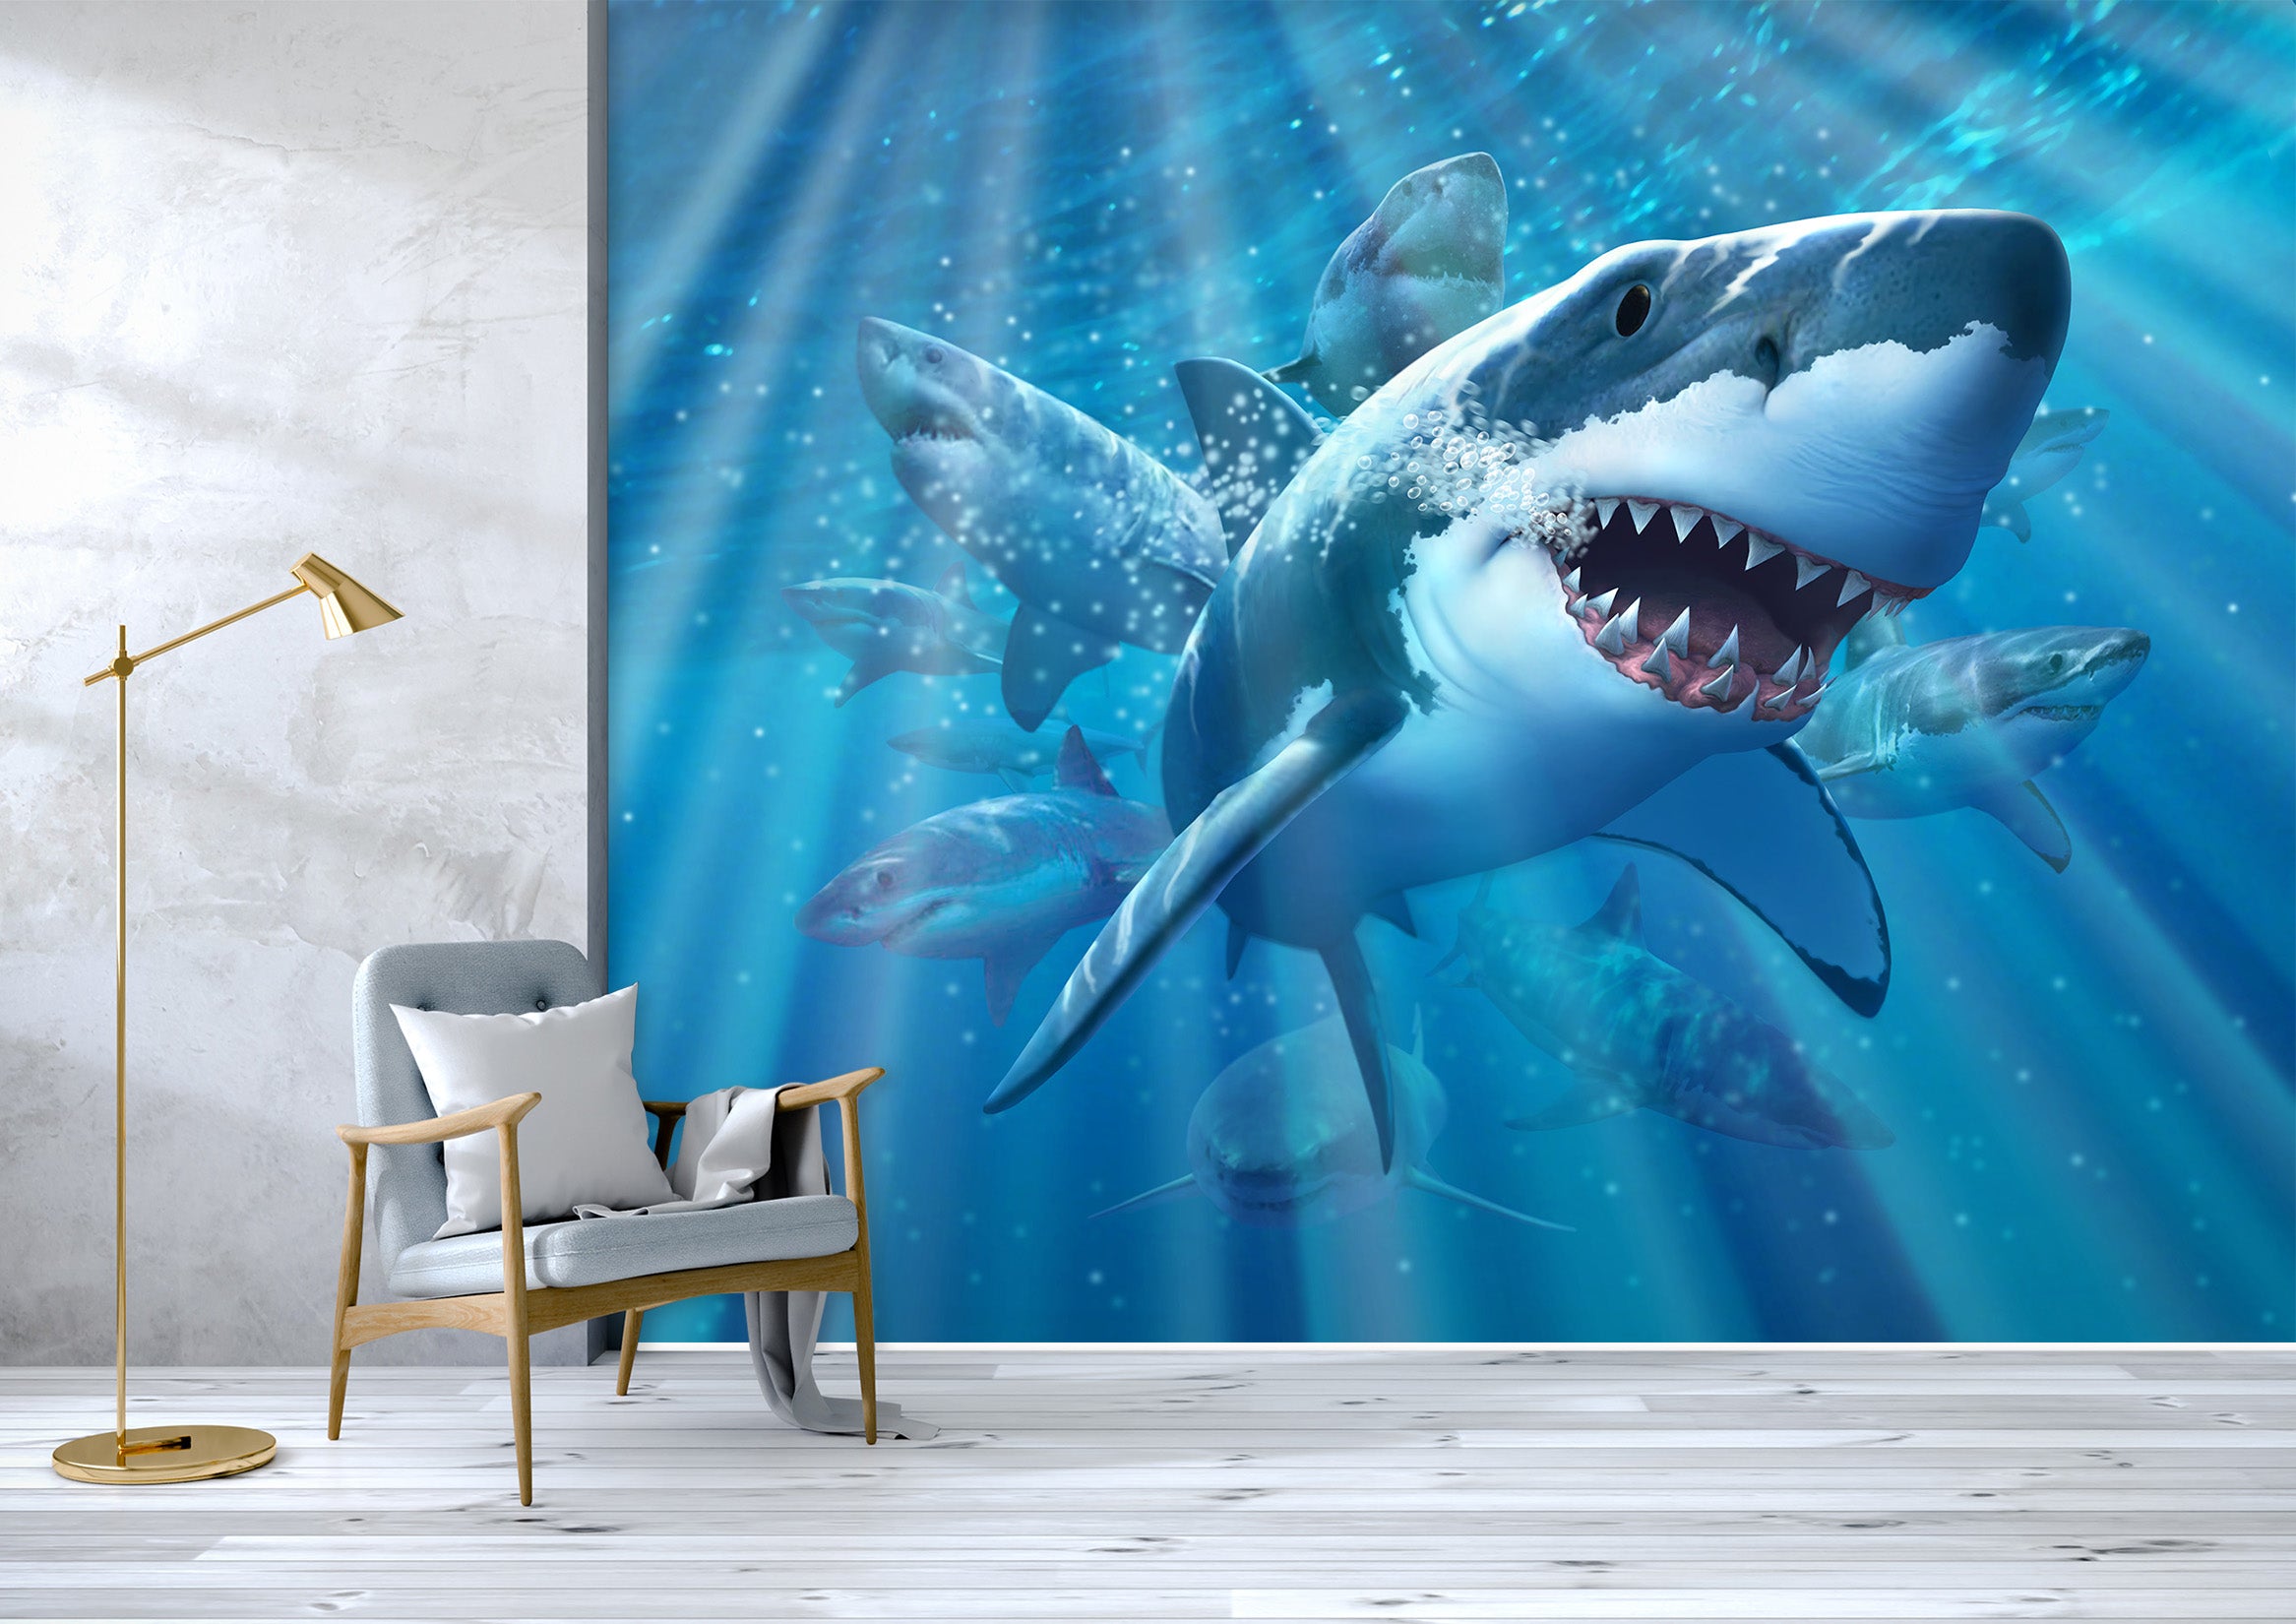 3D Great White Shark 109 Jerry LoFaro Wall Mural Wall Murals